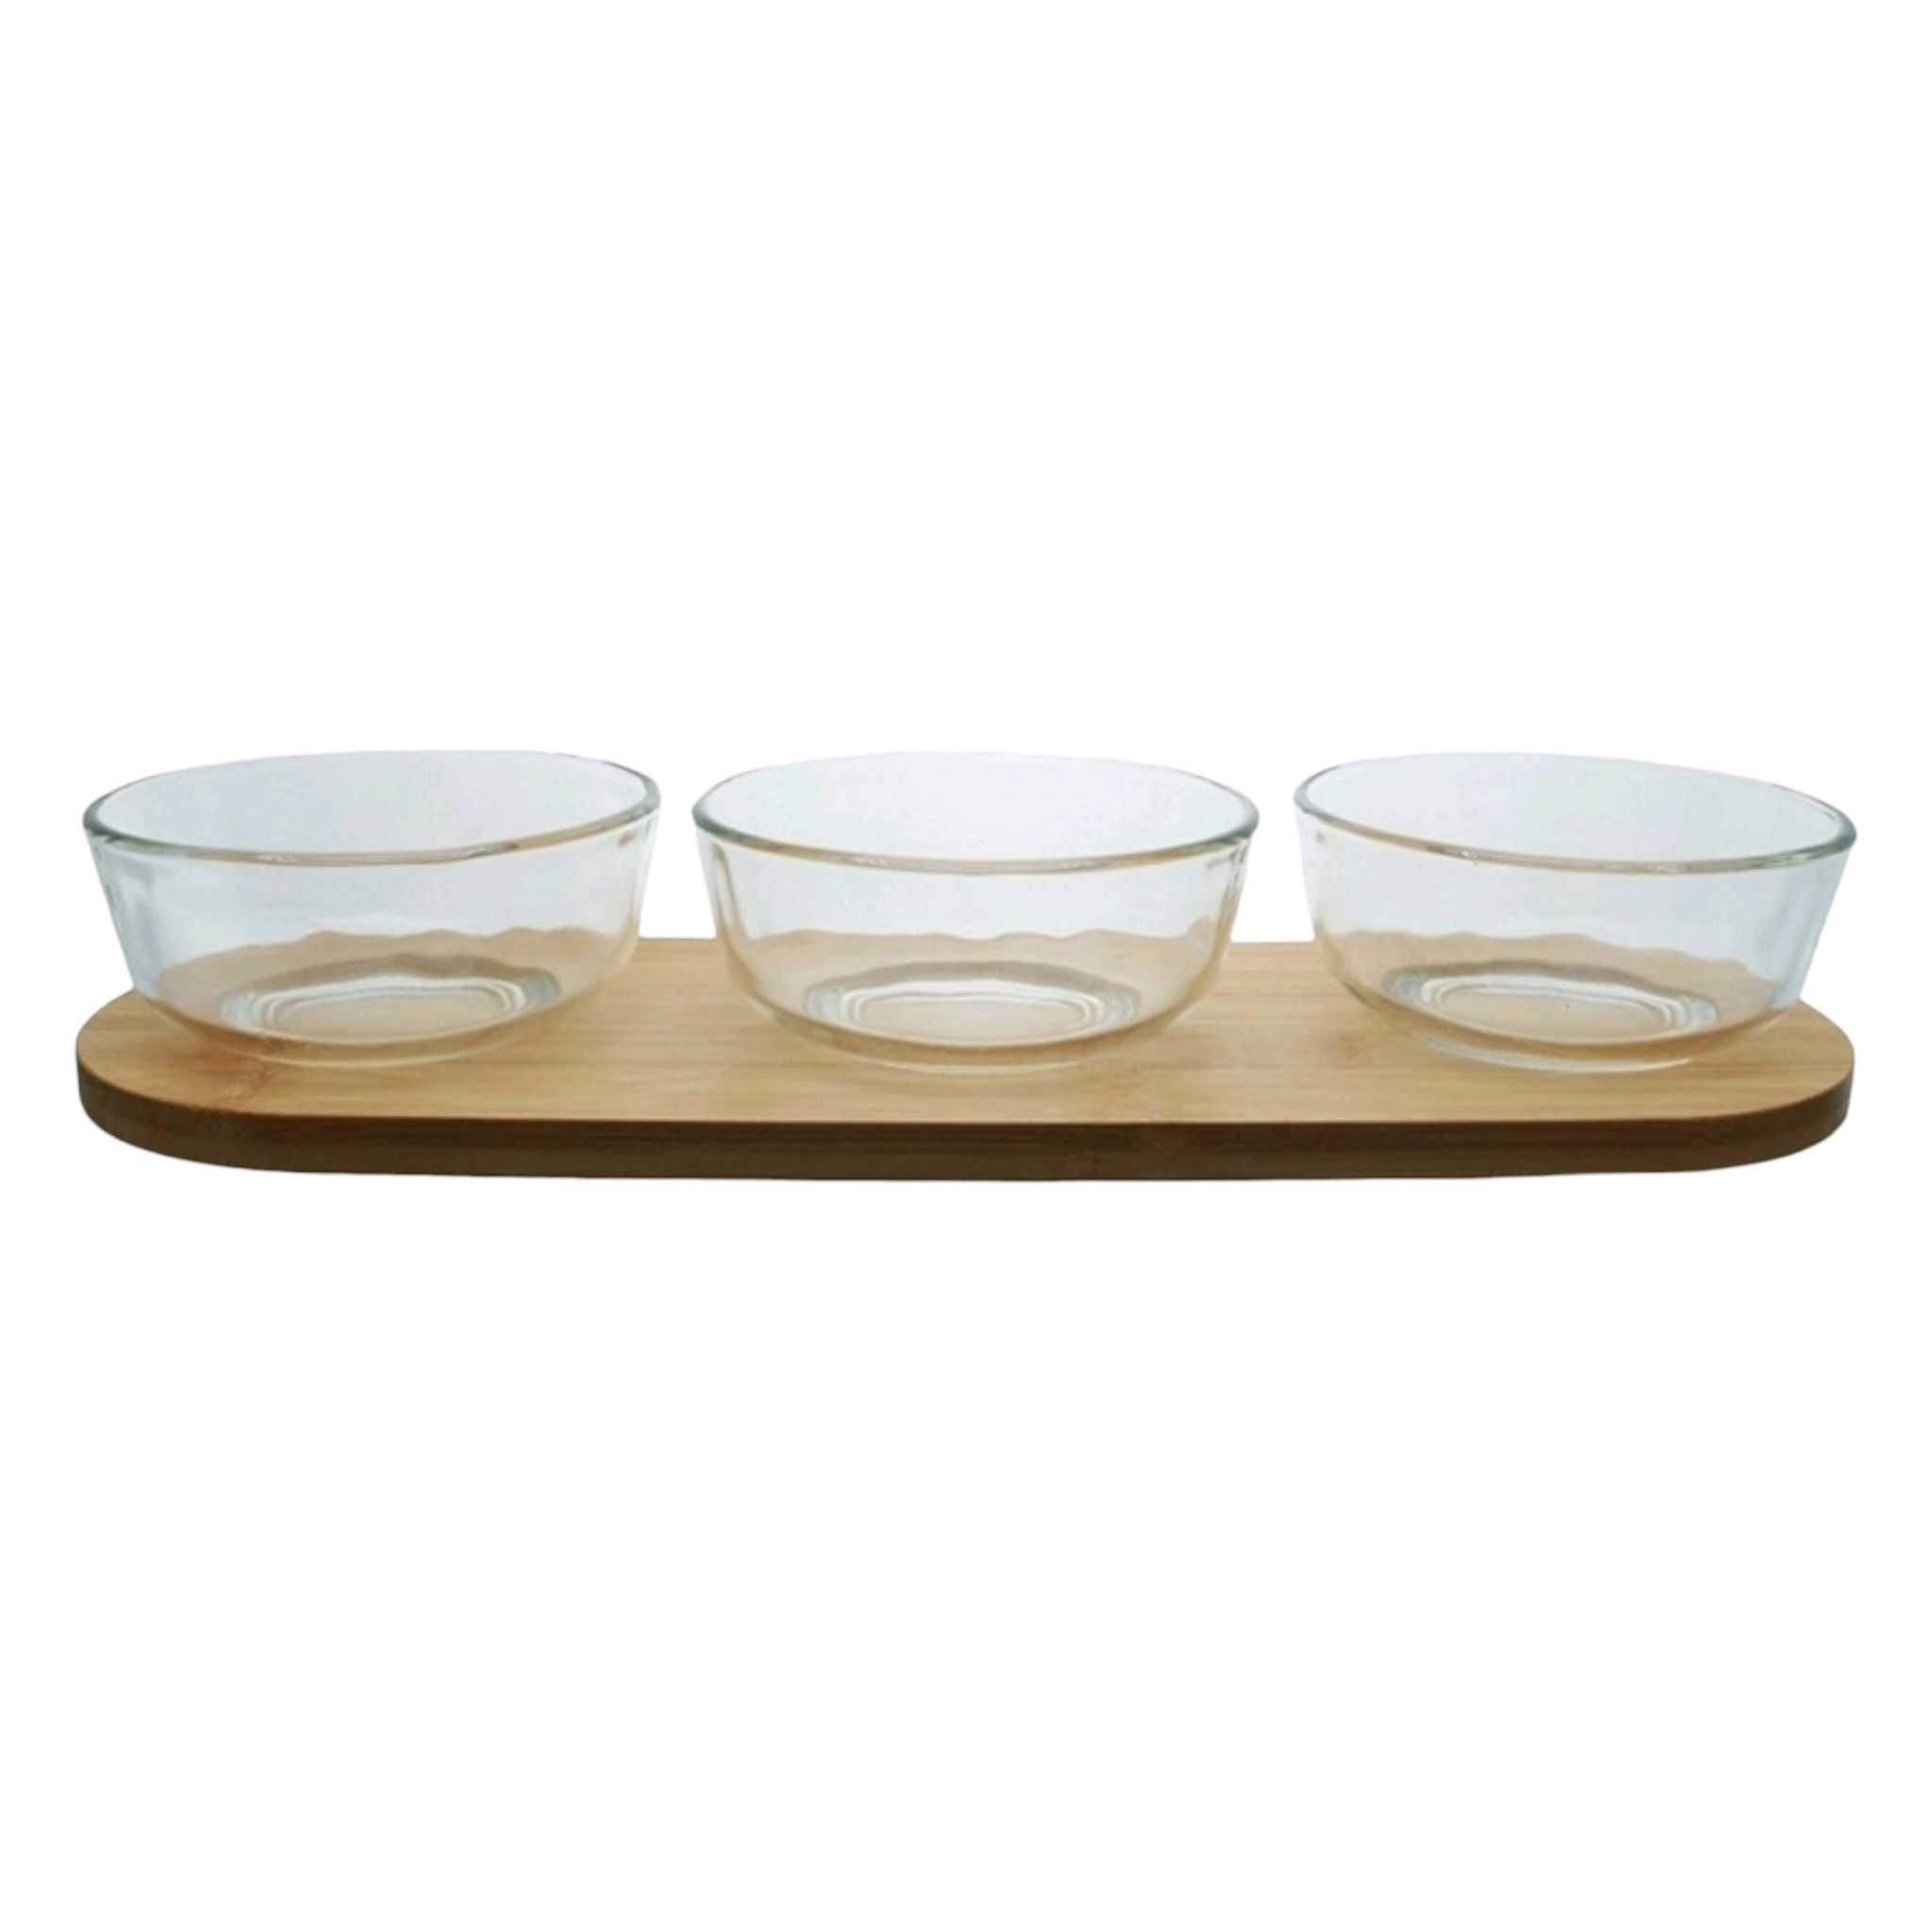 Aqua 3 Piece Glass Snack Bowl Set 260ml on Bamboo Serving Tray 27601